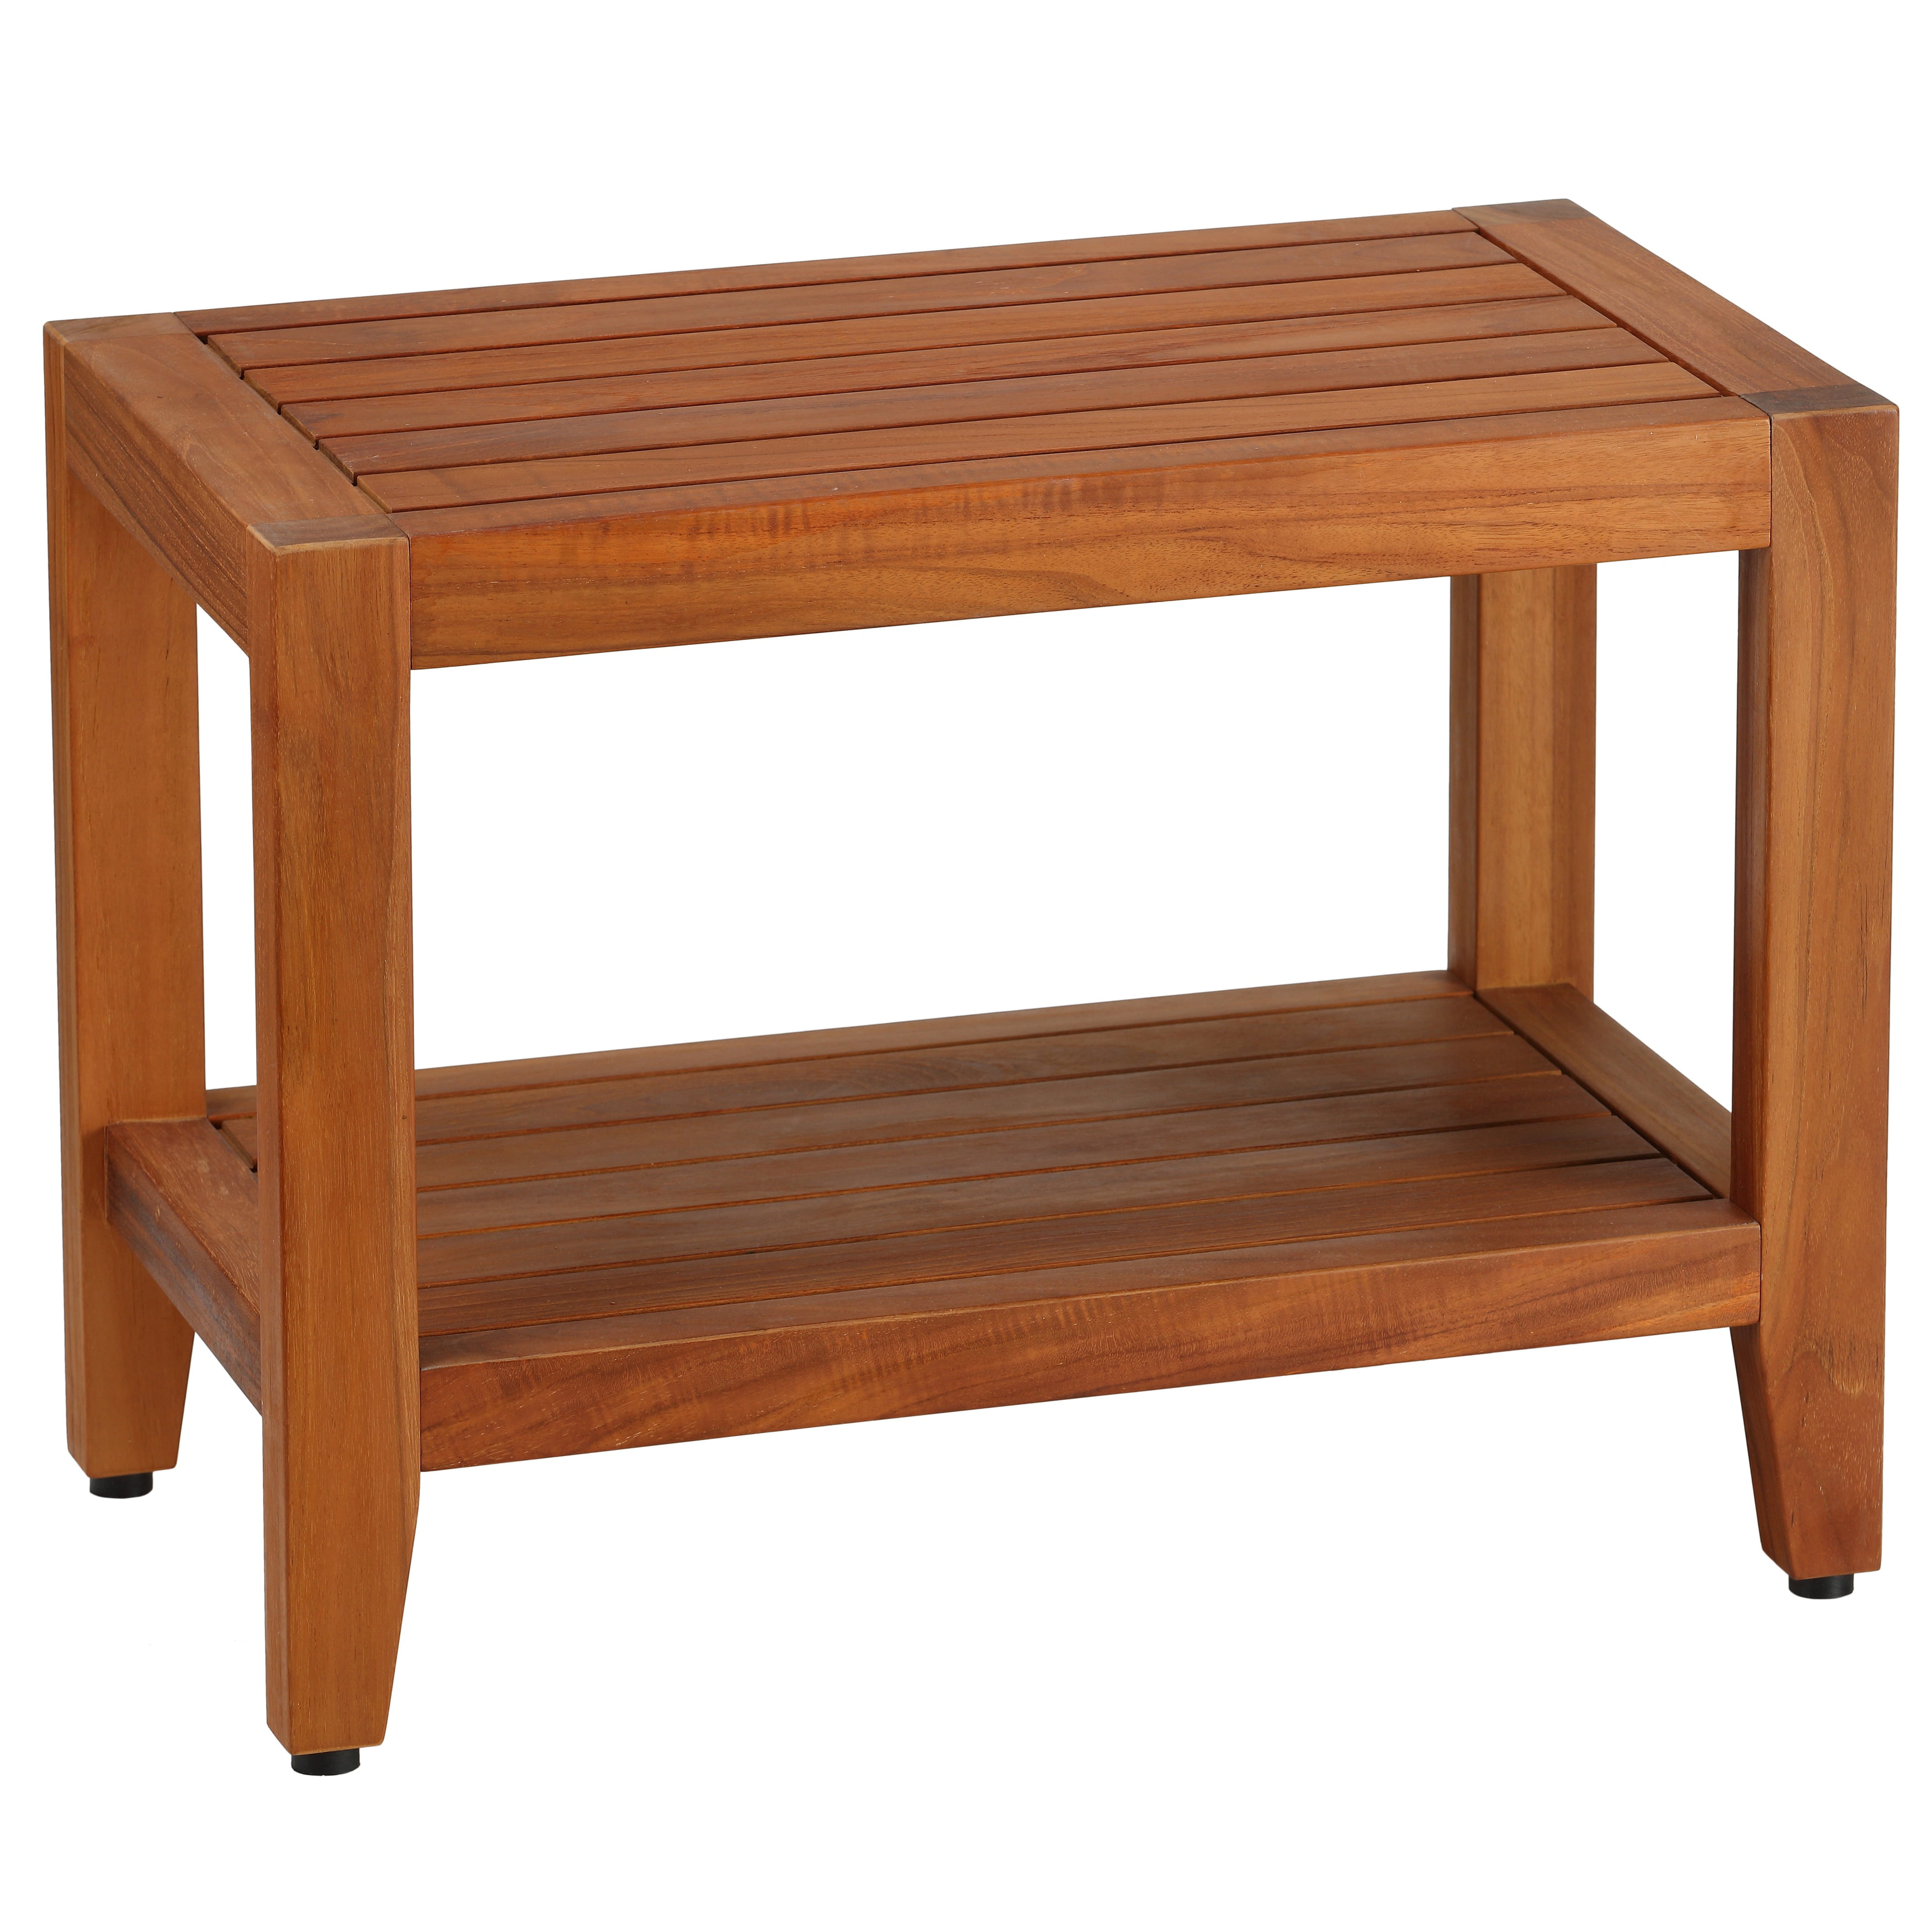 Bare Decor Teak Wood Serenity Spa 24 Inch Bench With Shelf